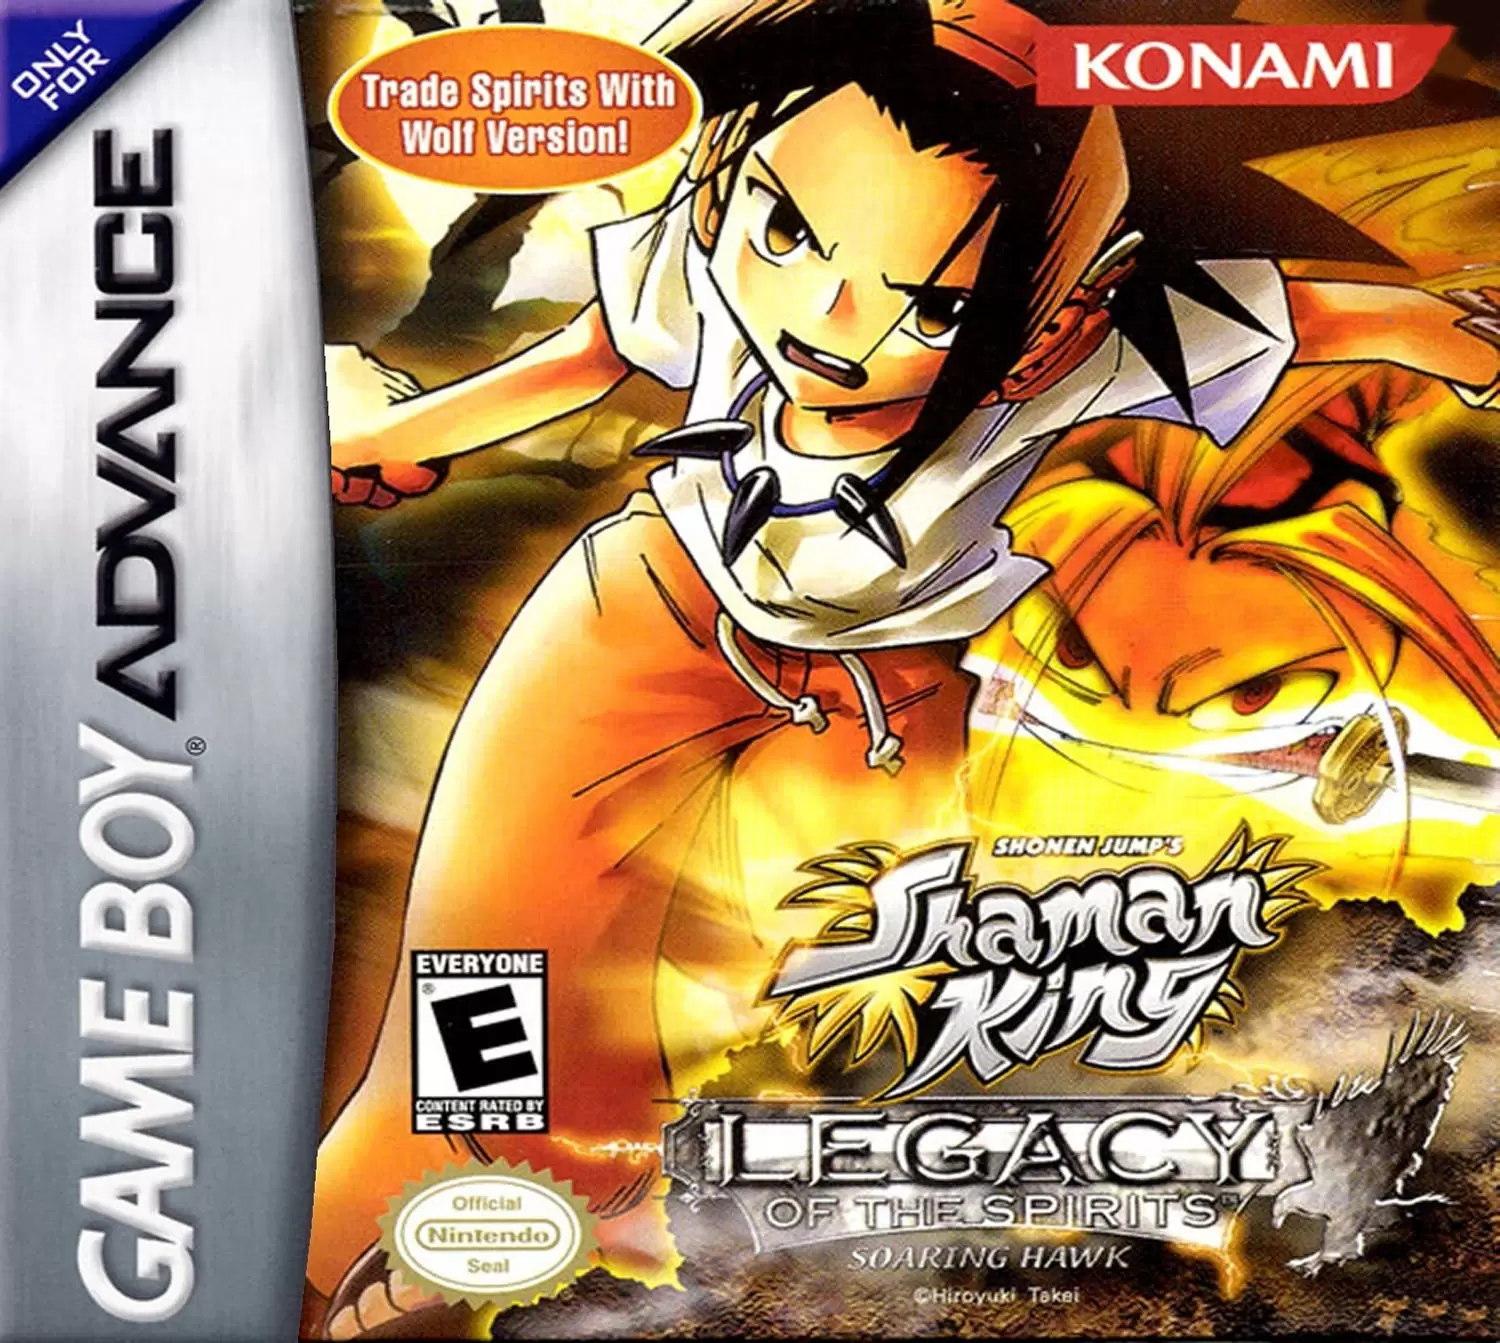 Jeux Game Boy Advance - Shonen Jump\'s Shaman King: Legacy of the Spirits, Soaring Hawk